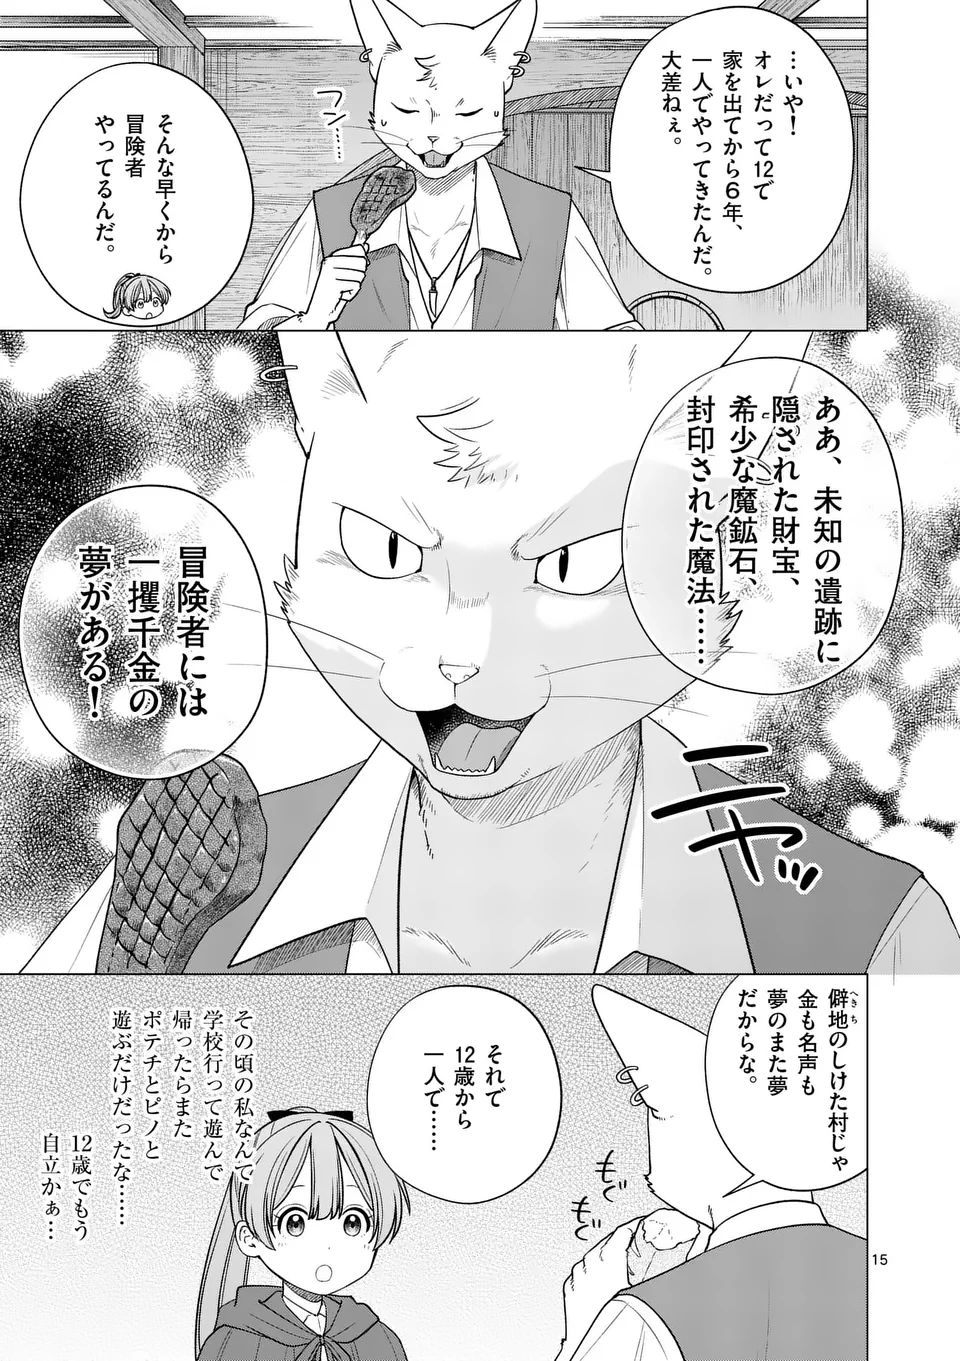 Isekai Pomeranian to Niji no Mofumofu Tabi - Chapter 9 - Page 15